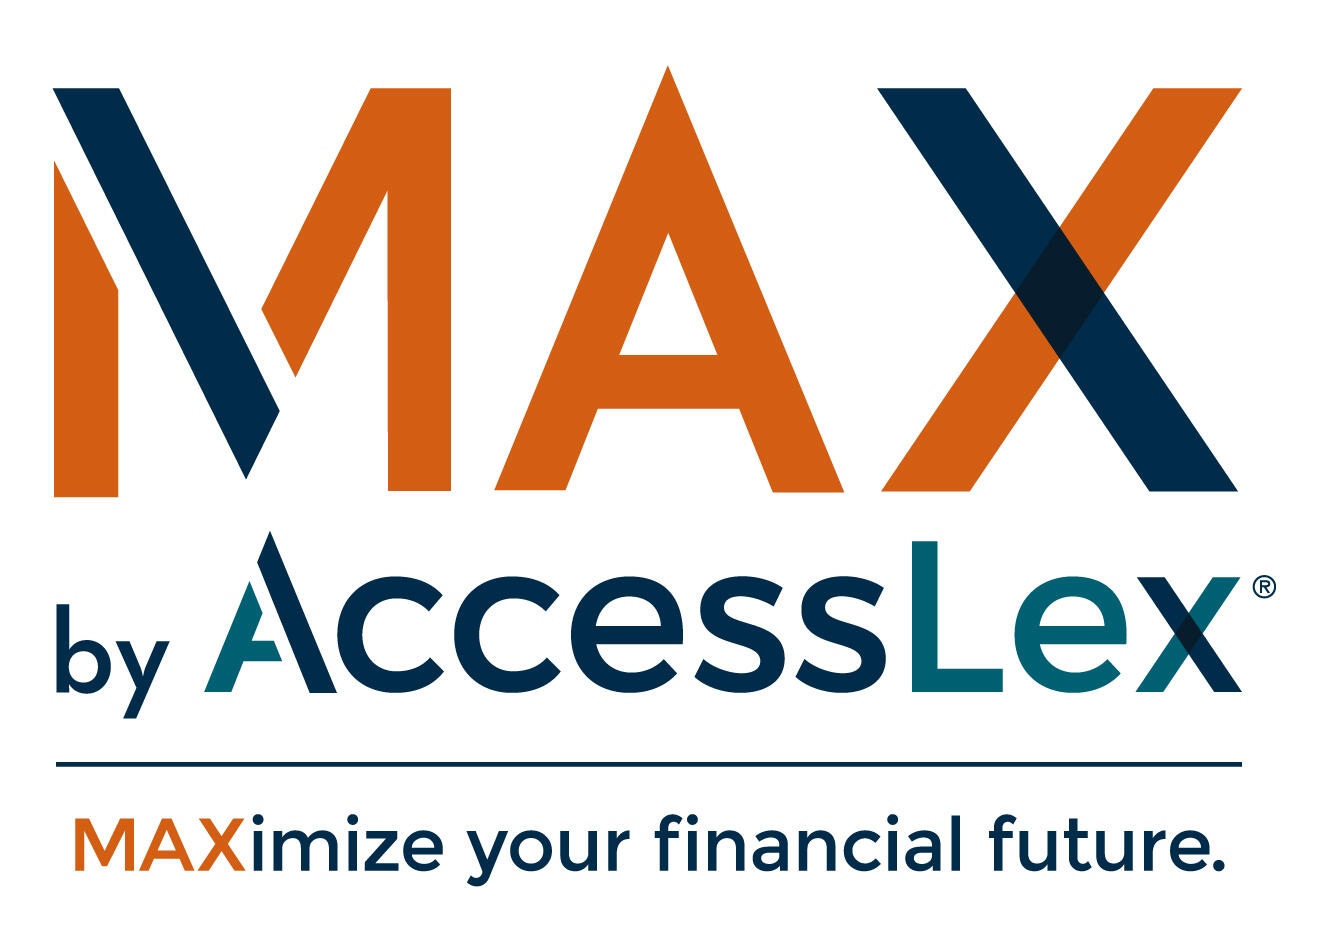 MAX by AccessLex